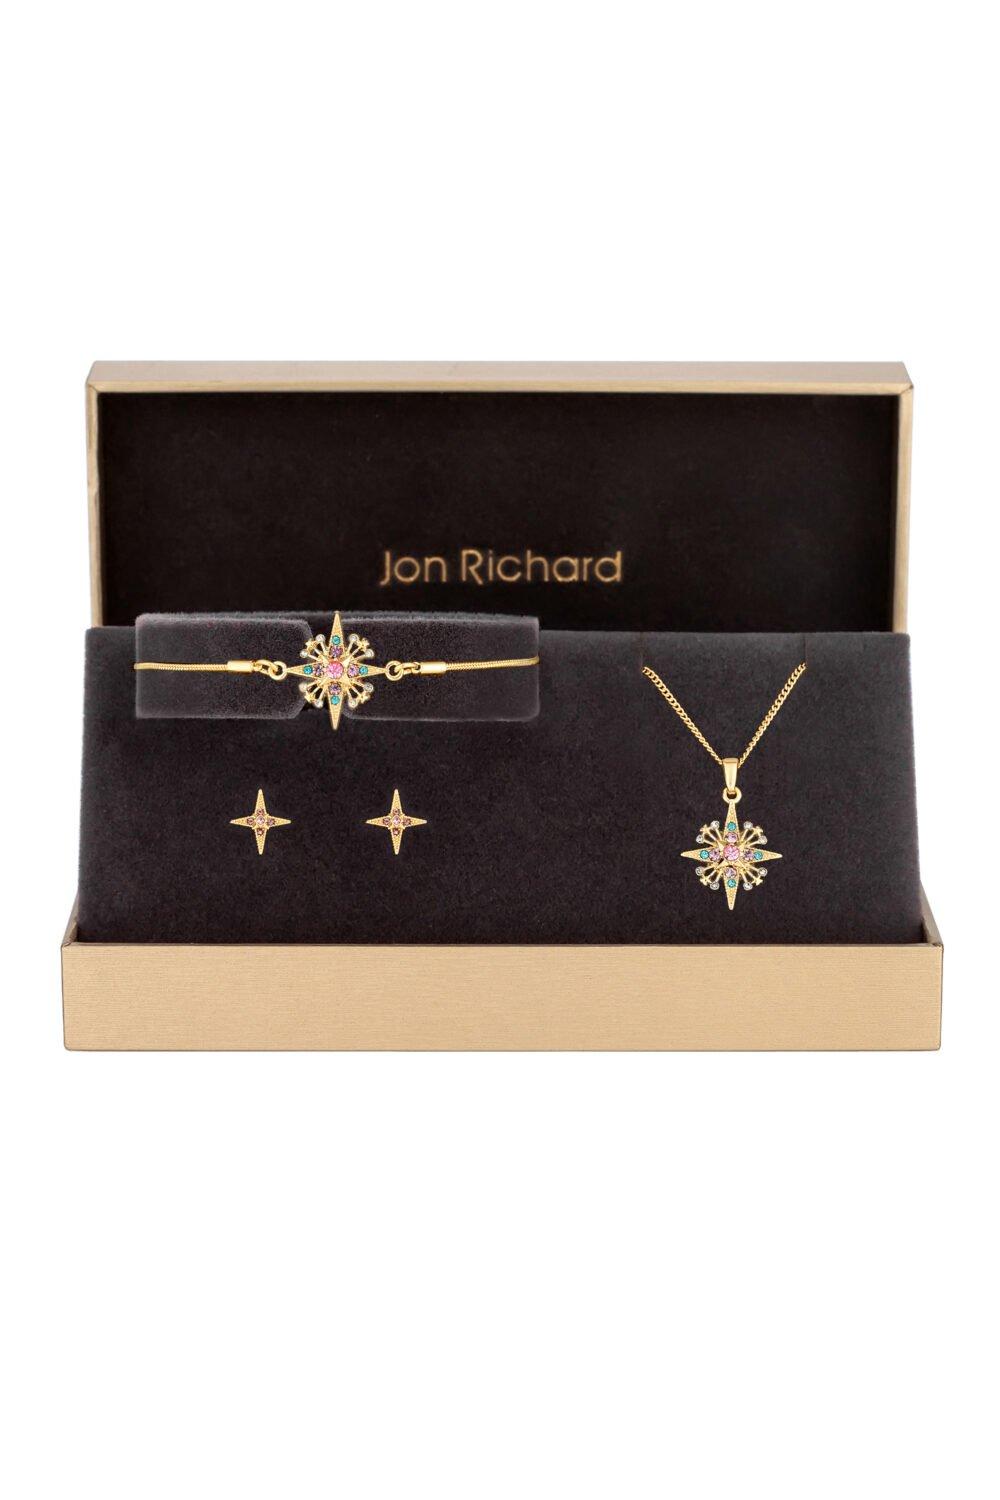 Jon Richard Jon Richard Gold Plated Multicoloured Star Trio Set - Gift Boxed